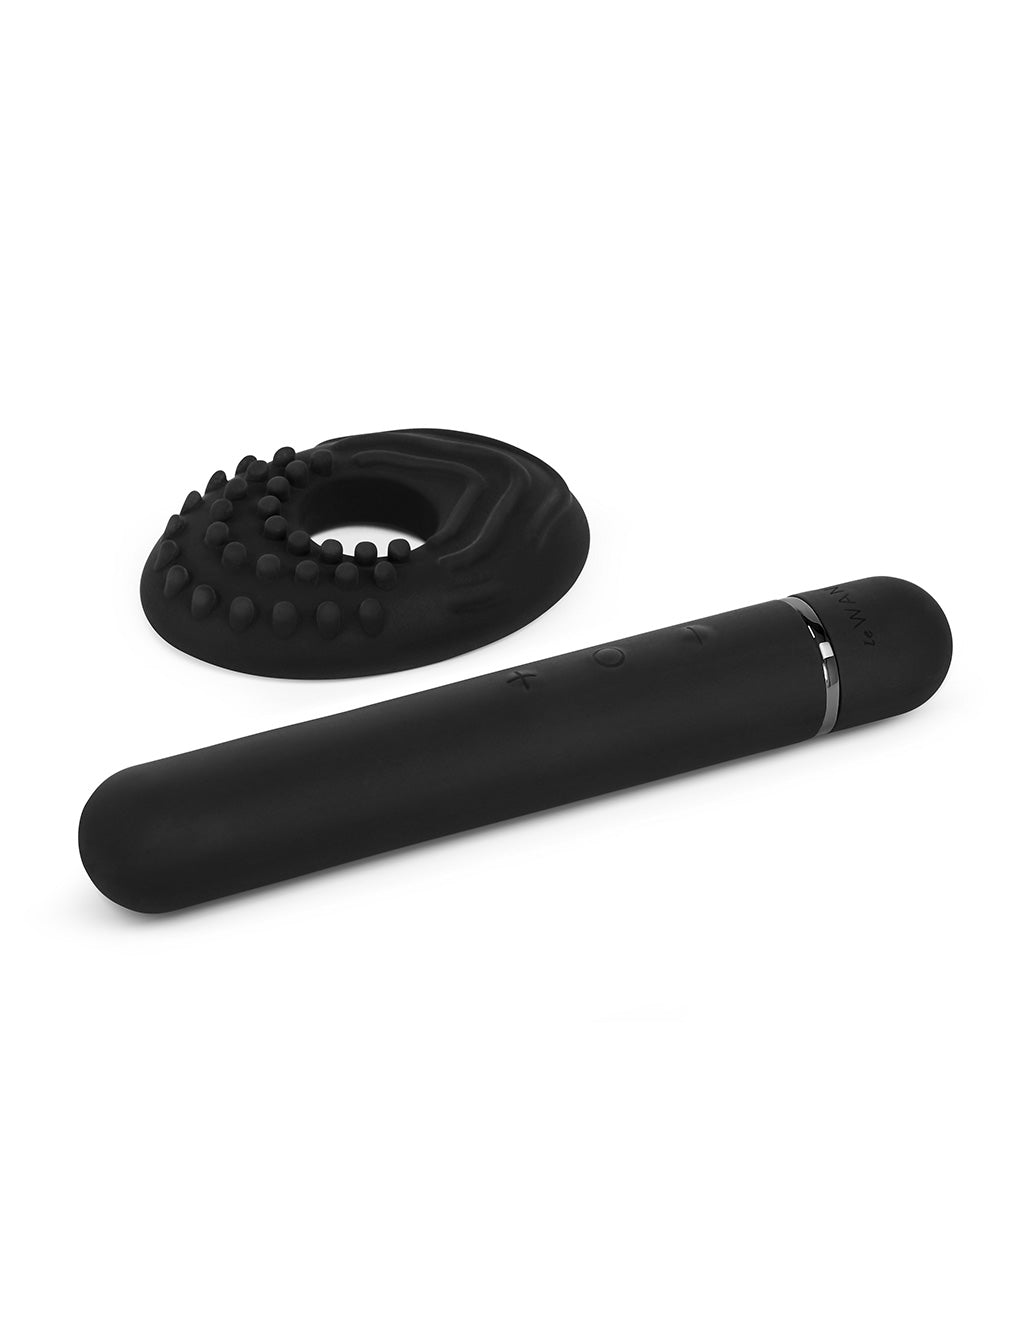 Le Wand Baton Rechargeable Clitoral Vibrator- Black- Attachments